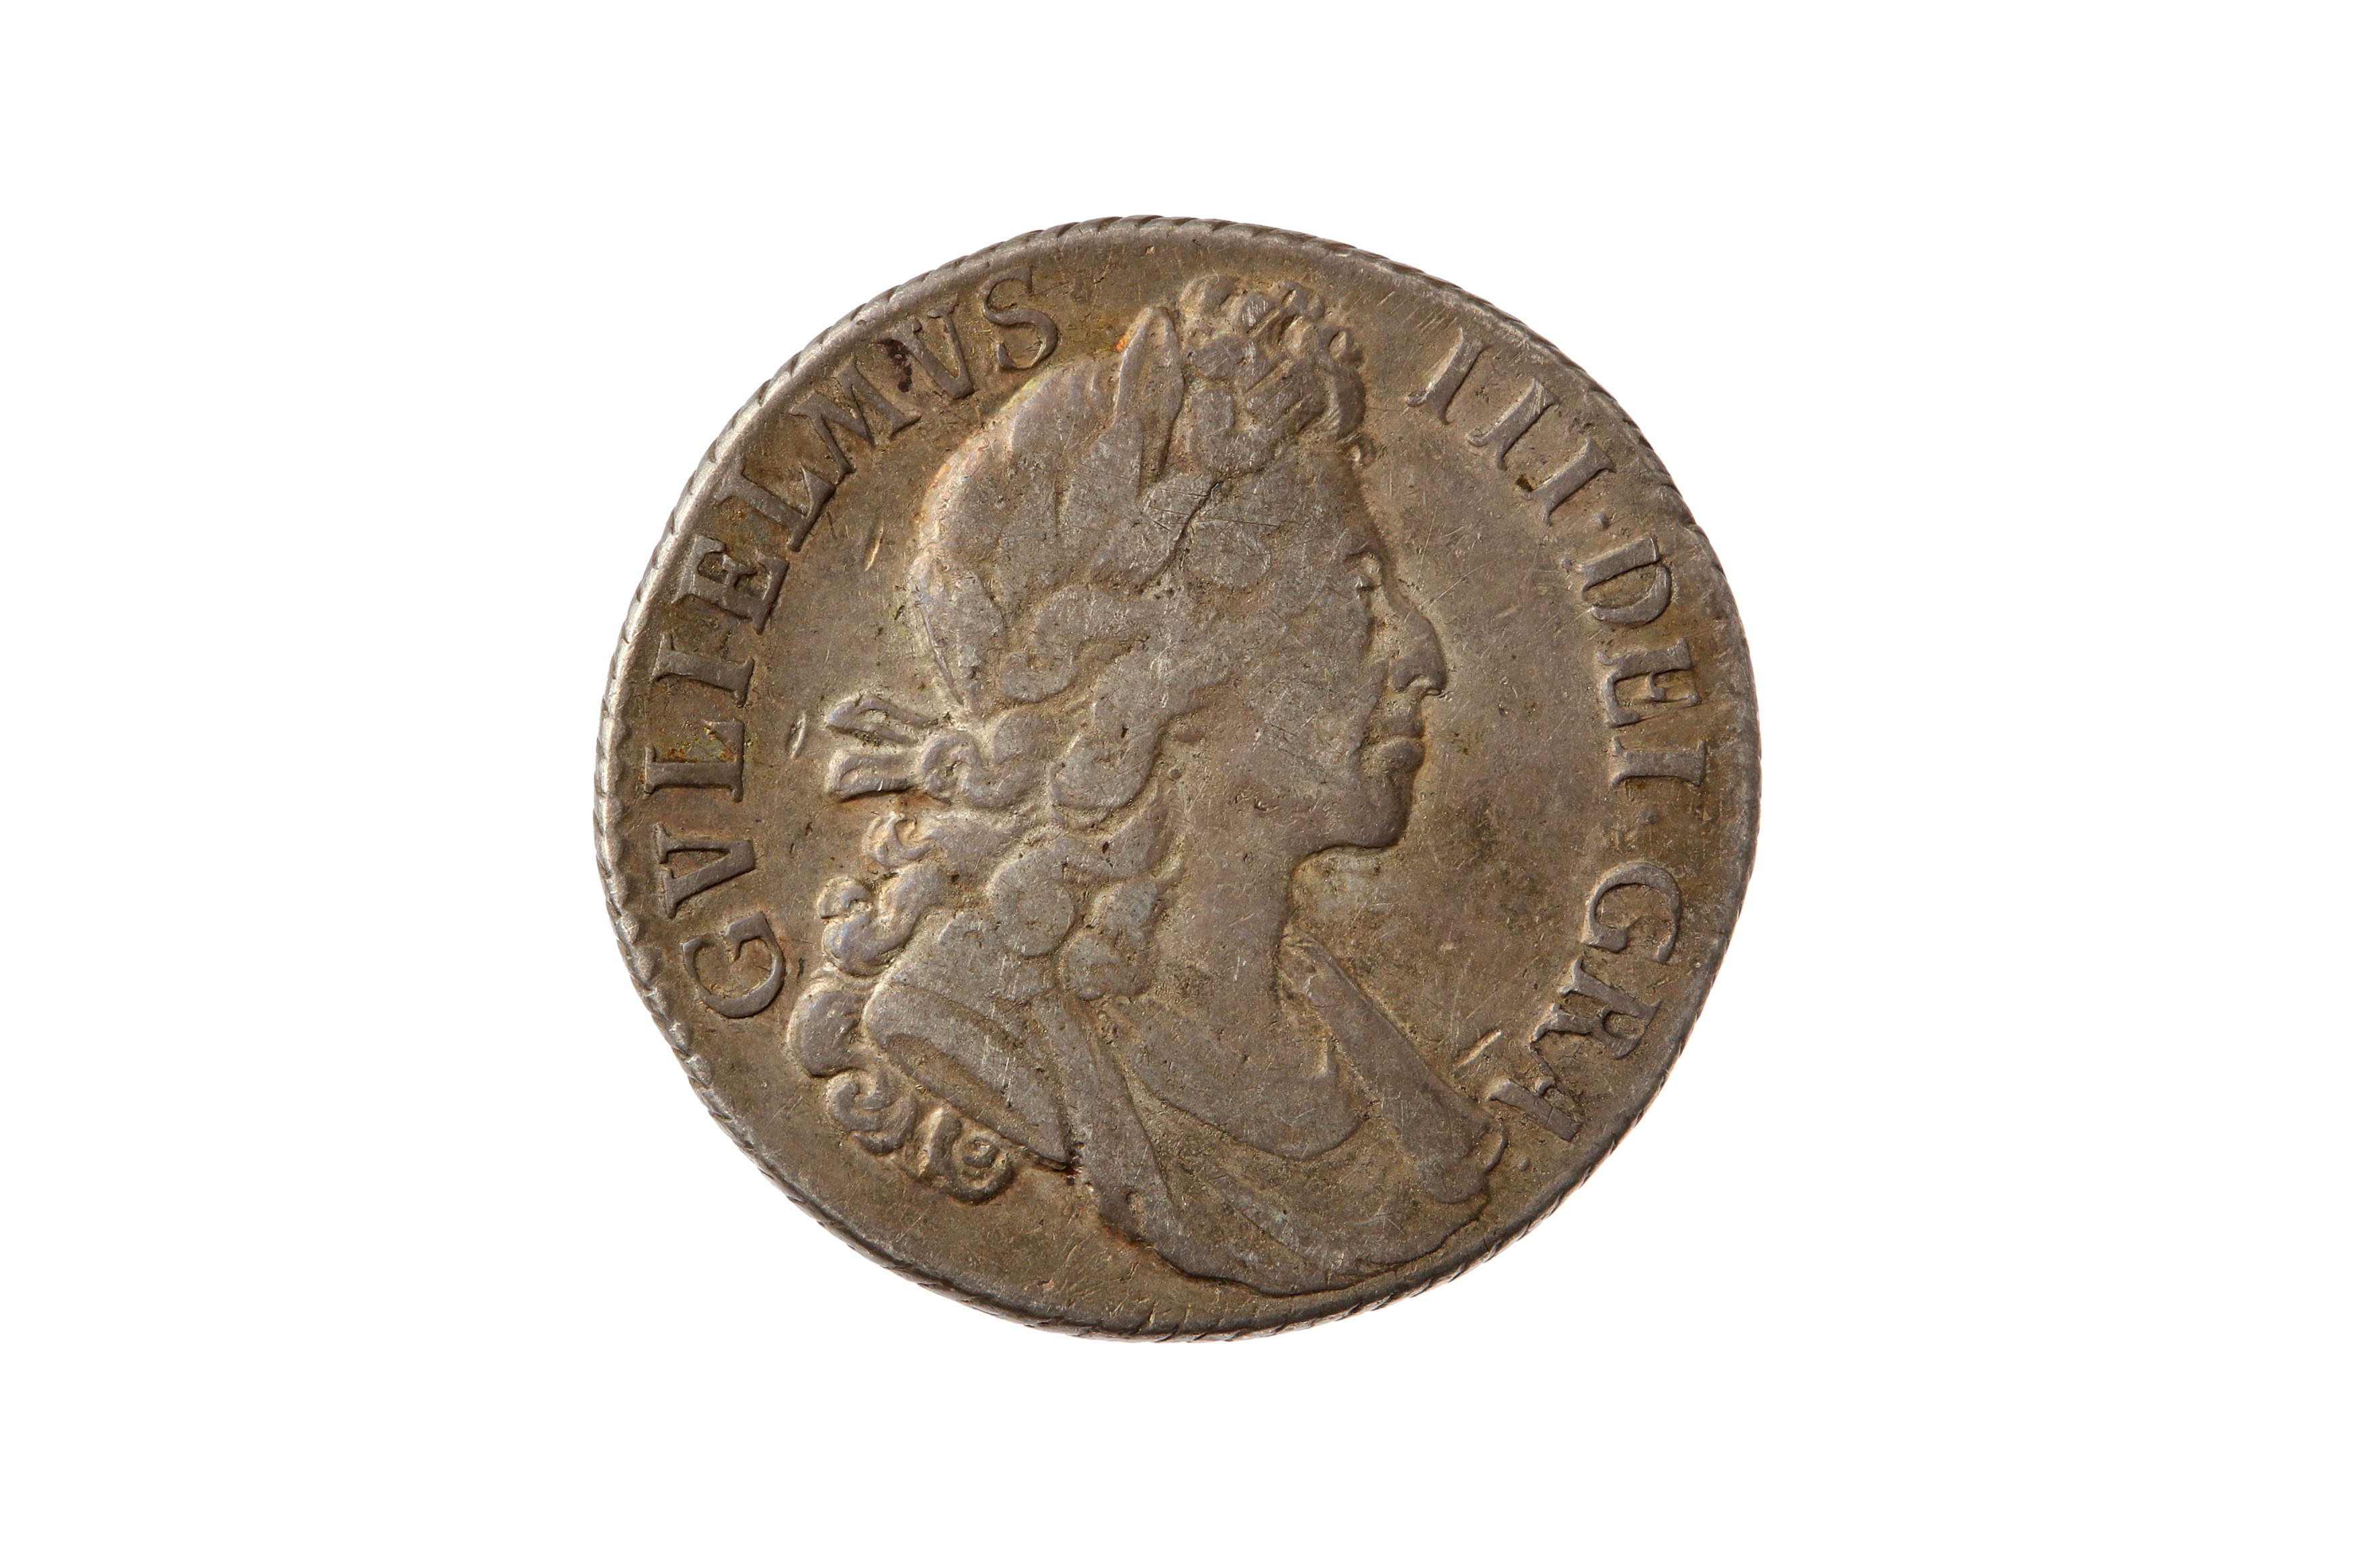 WILLIAM III (1694 - 1702), 1700 SHILLING.